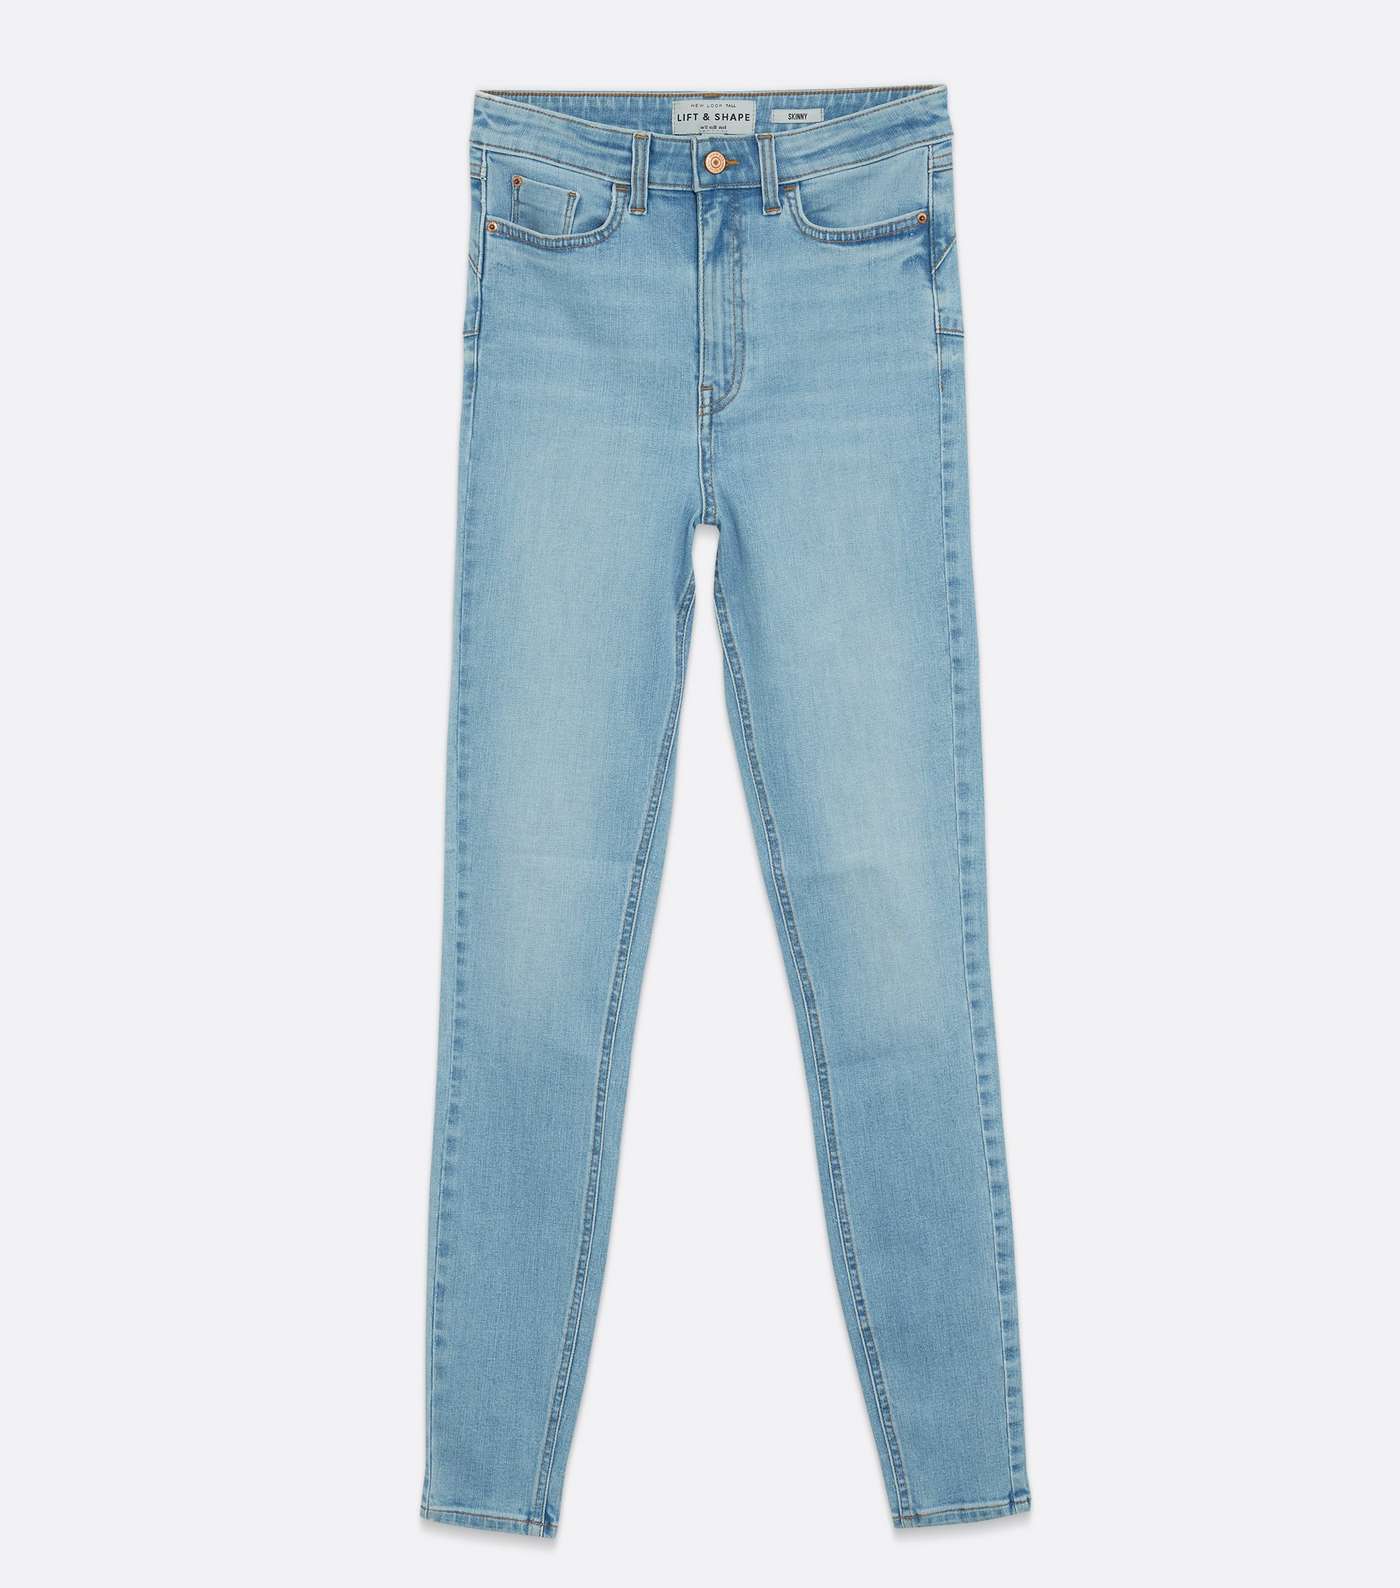 Tall Pale Blue Lift & Shape Jenna Skinny Jeans Image 5